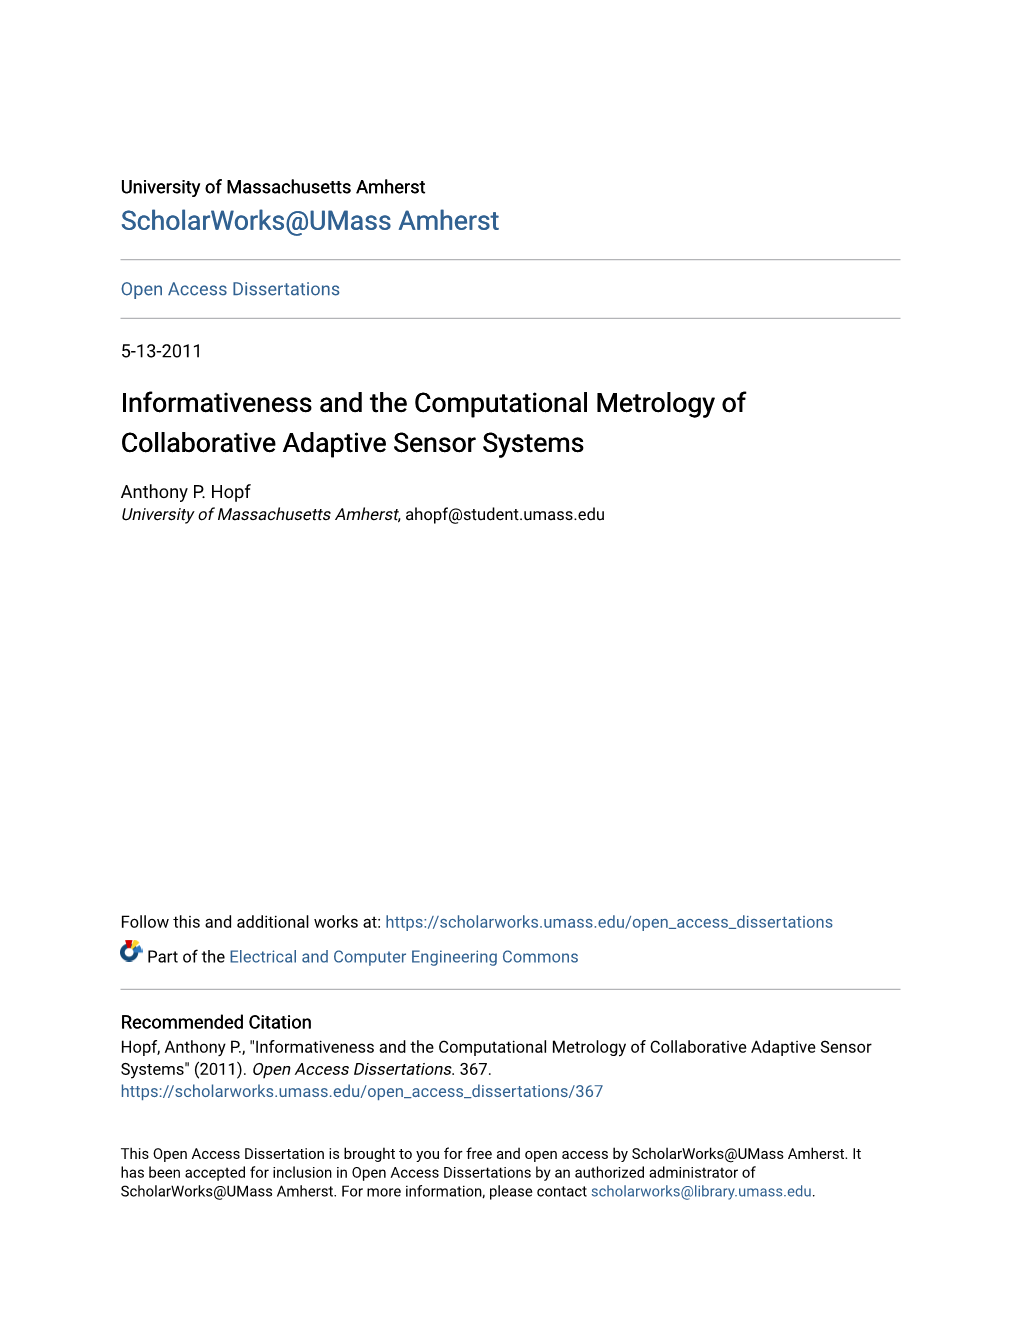 Informativeness and the Computational Metrology of Collaborative Adaptive Sensor Systems